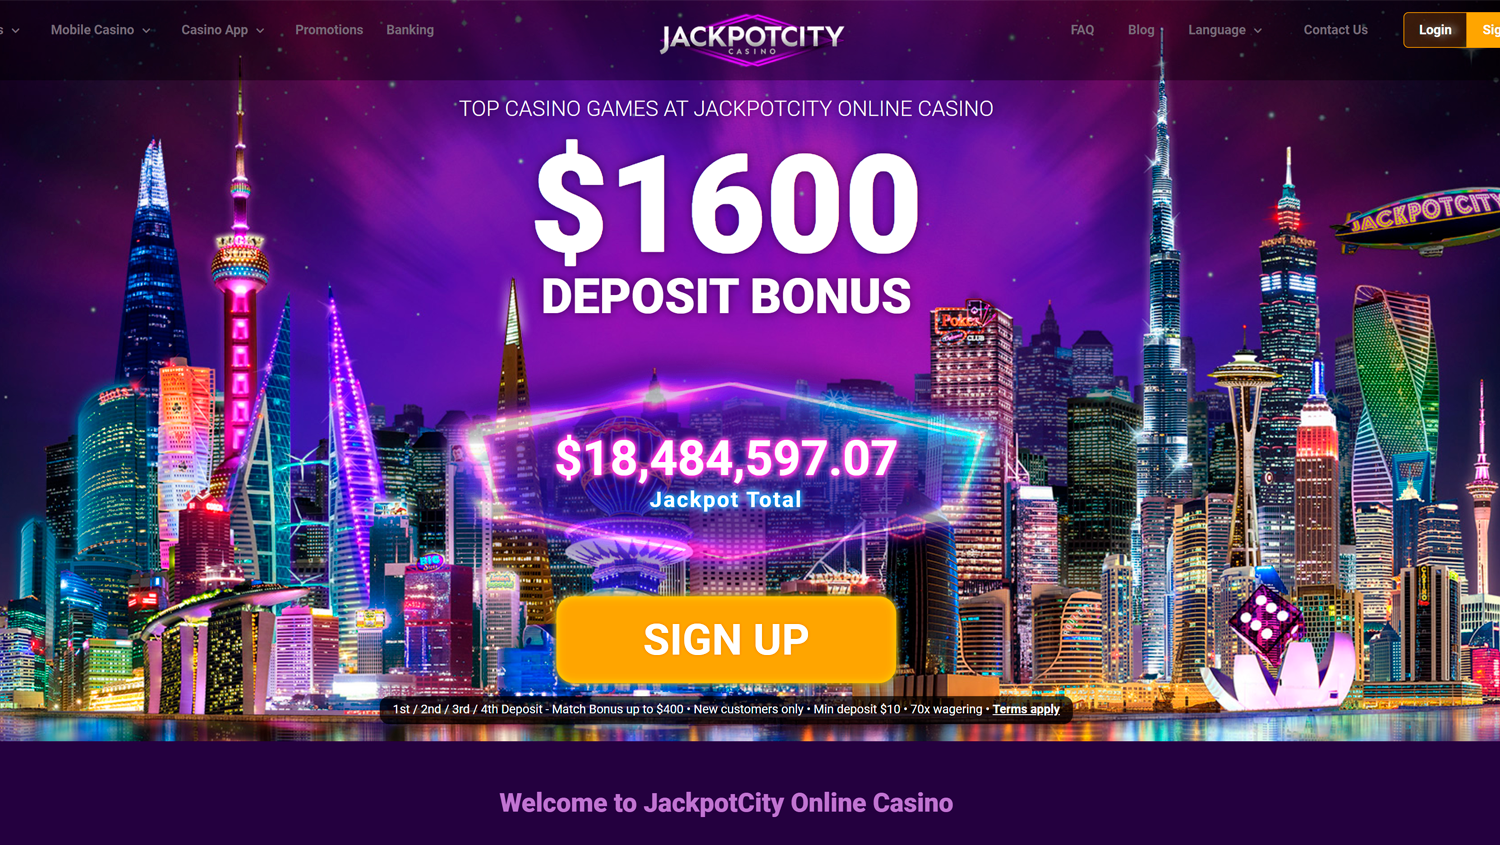 Main page on JackpotCity Casino site